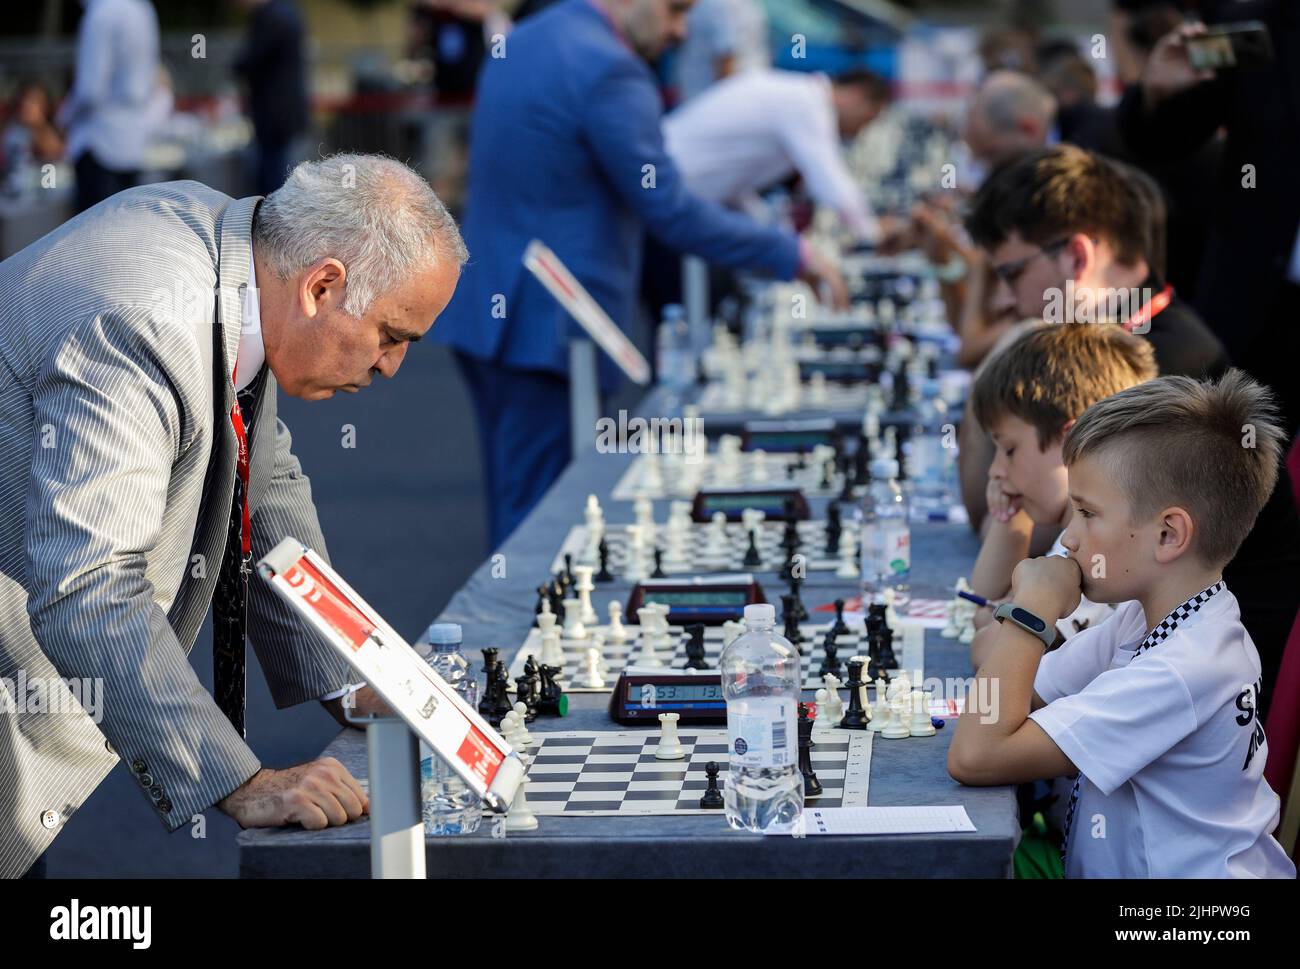 Garry Kasparov  Top Chess Players 